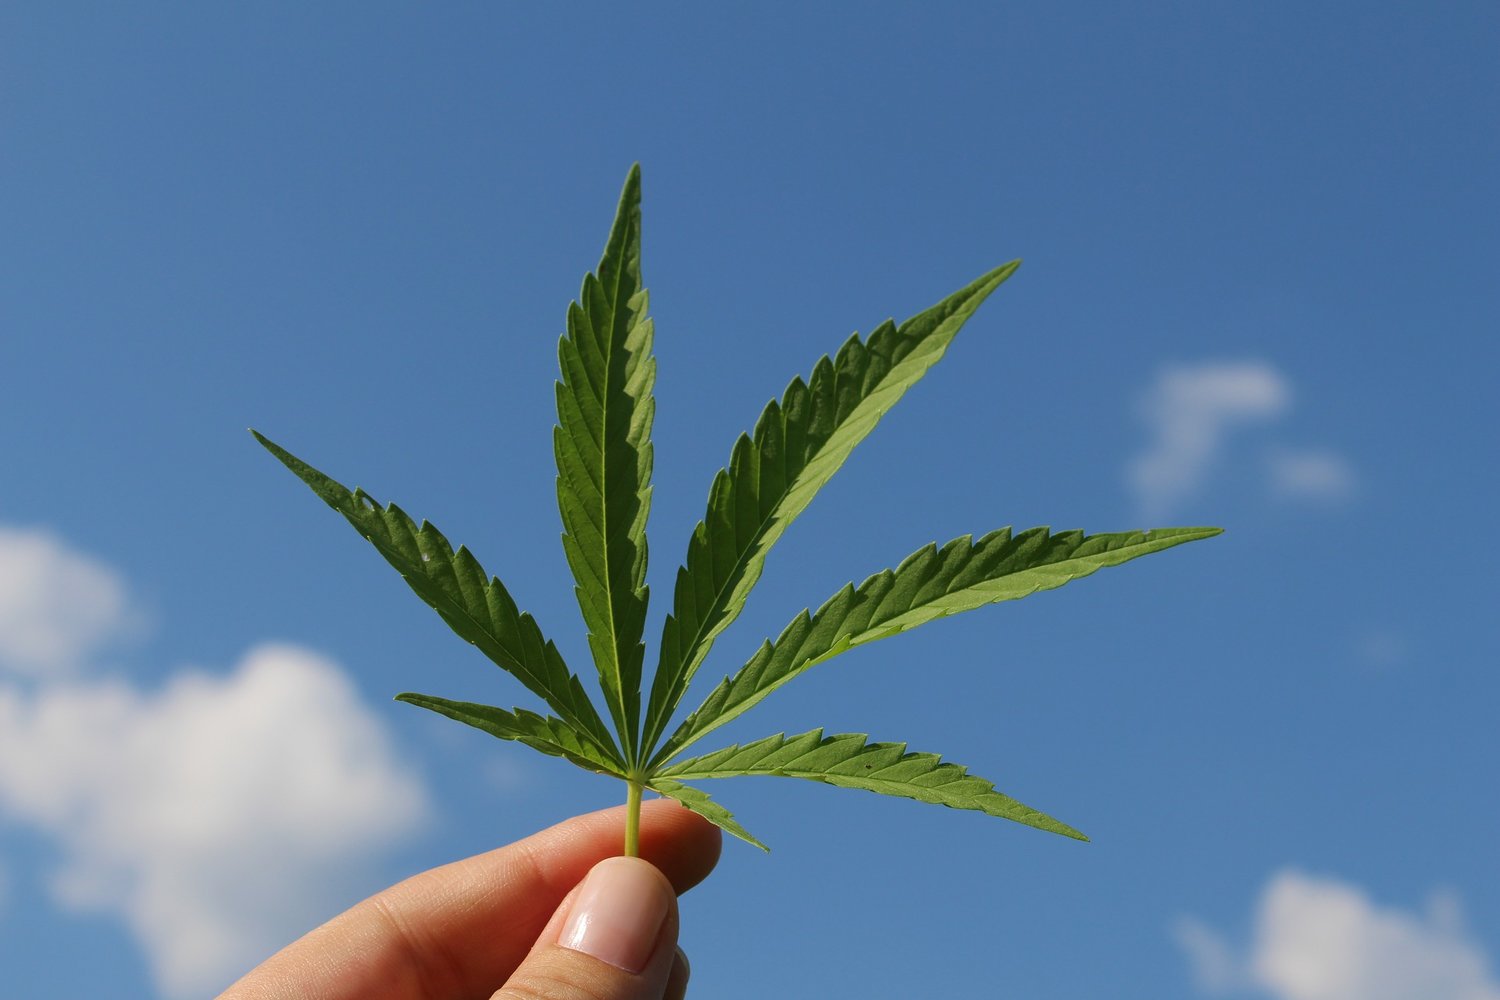 Healing Hope with Cannabis